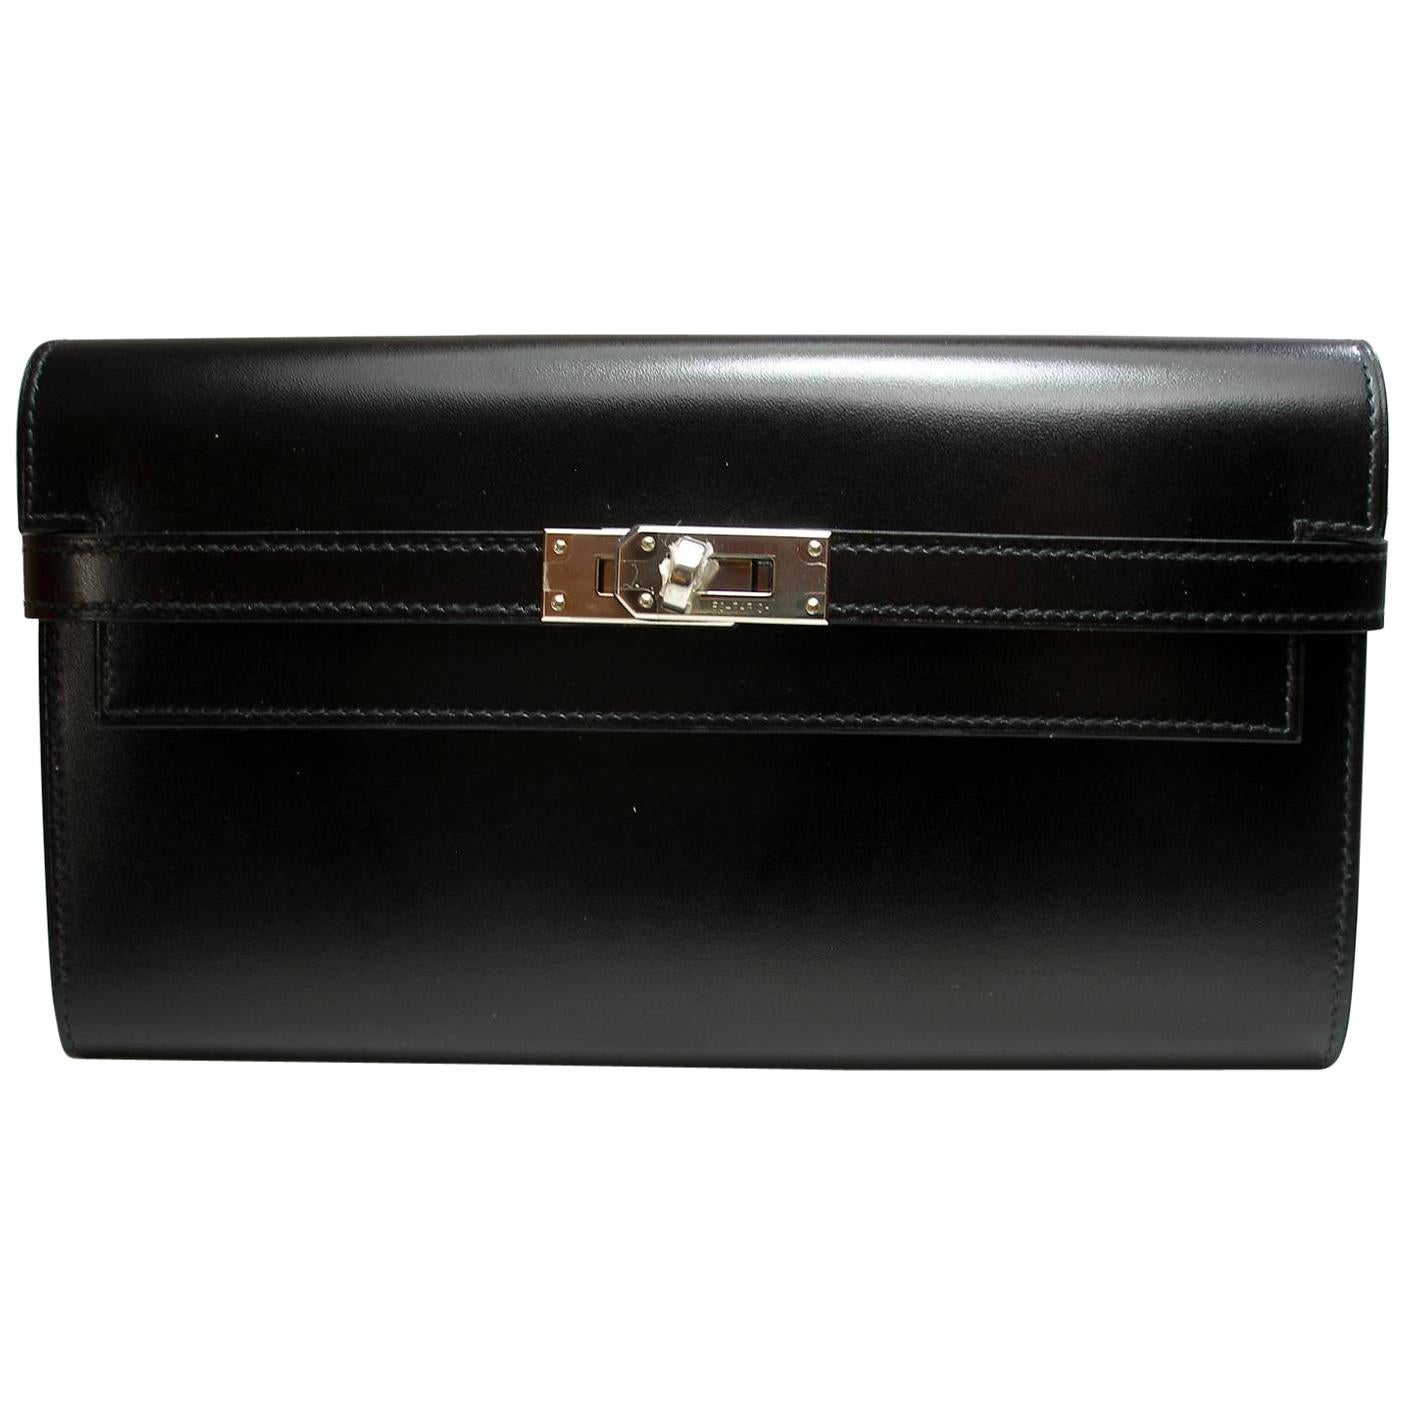 Collectible Item Hermès Long Kelly Wallet Black Box Leather Palladium Hdw / NEW